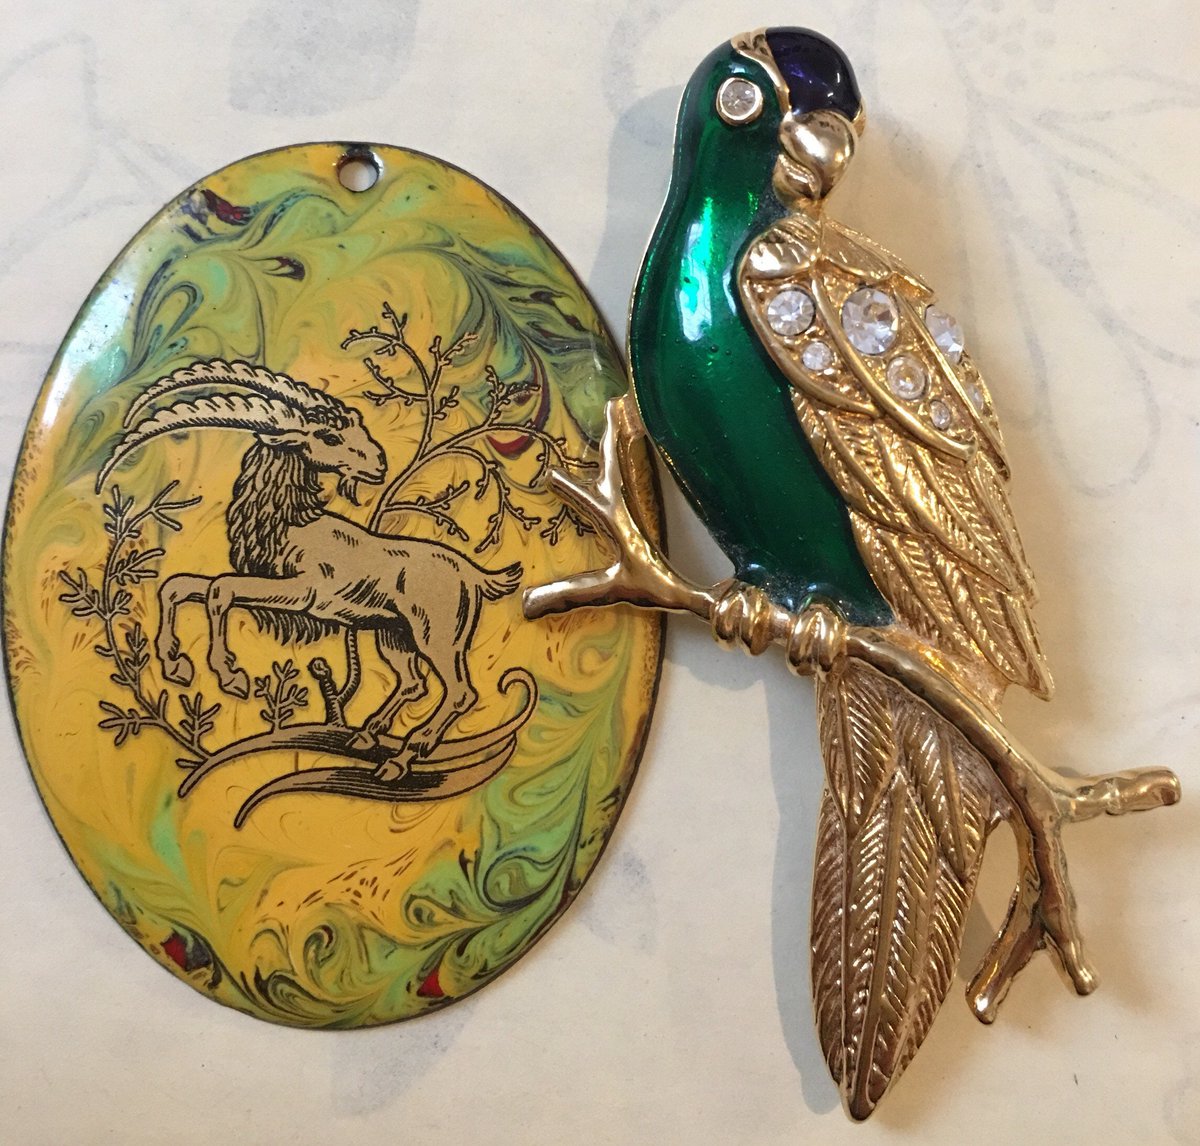 Vintage enamelled gold plated Parrot brooch & enamelled pendant etsy.me/3evbVma #vintagejewellery #antiquejewellery #retrojewellery #handpainted #pendant #retrobrooch #brooch #vintagependant #enamelledpenda